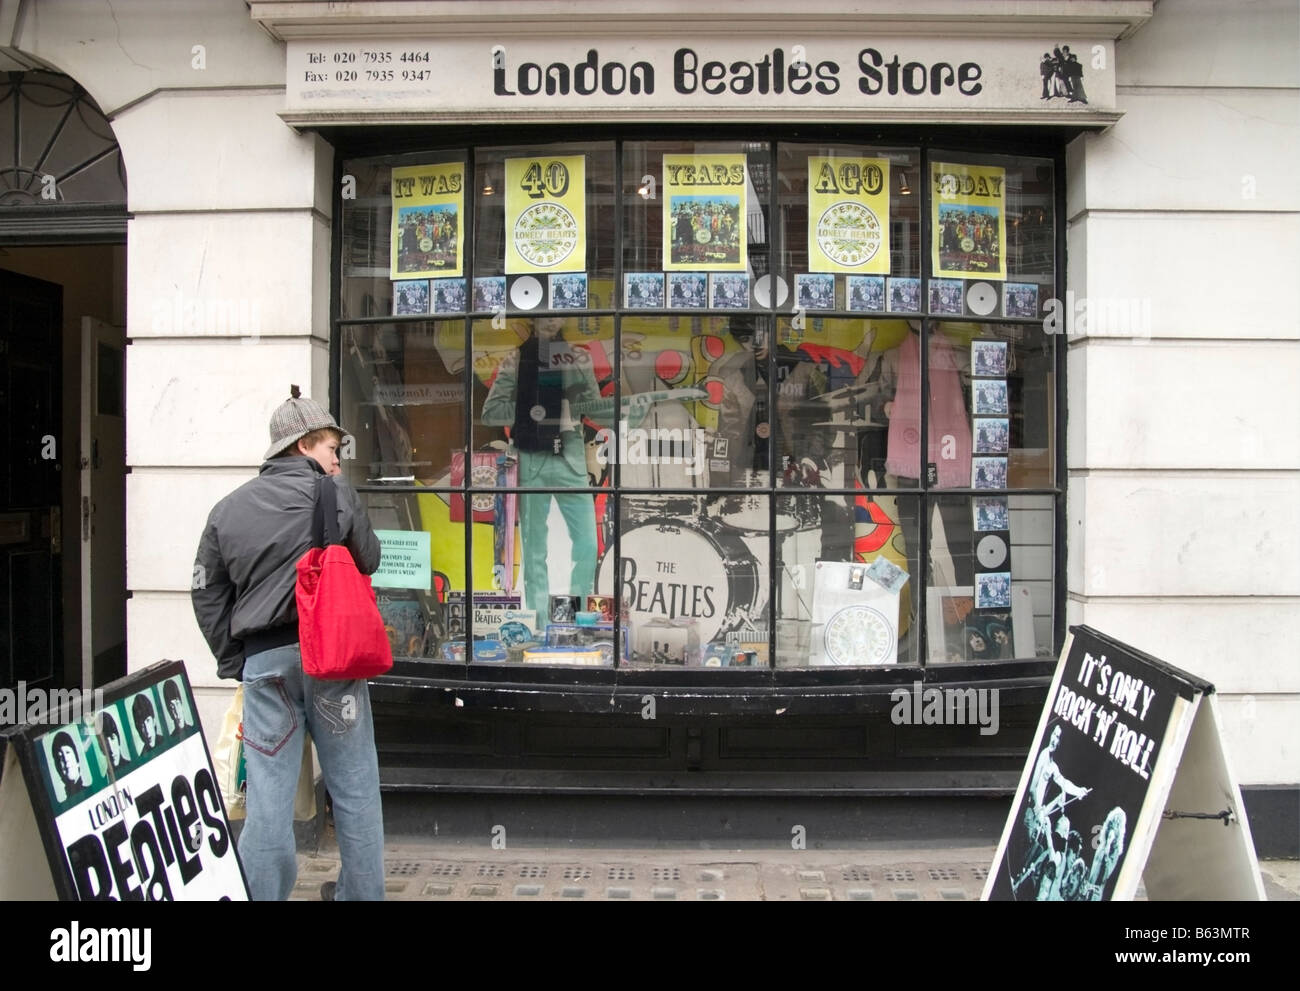 The London Beatles Store Stock Photo